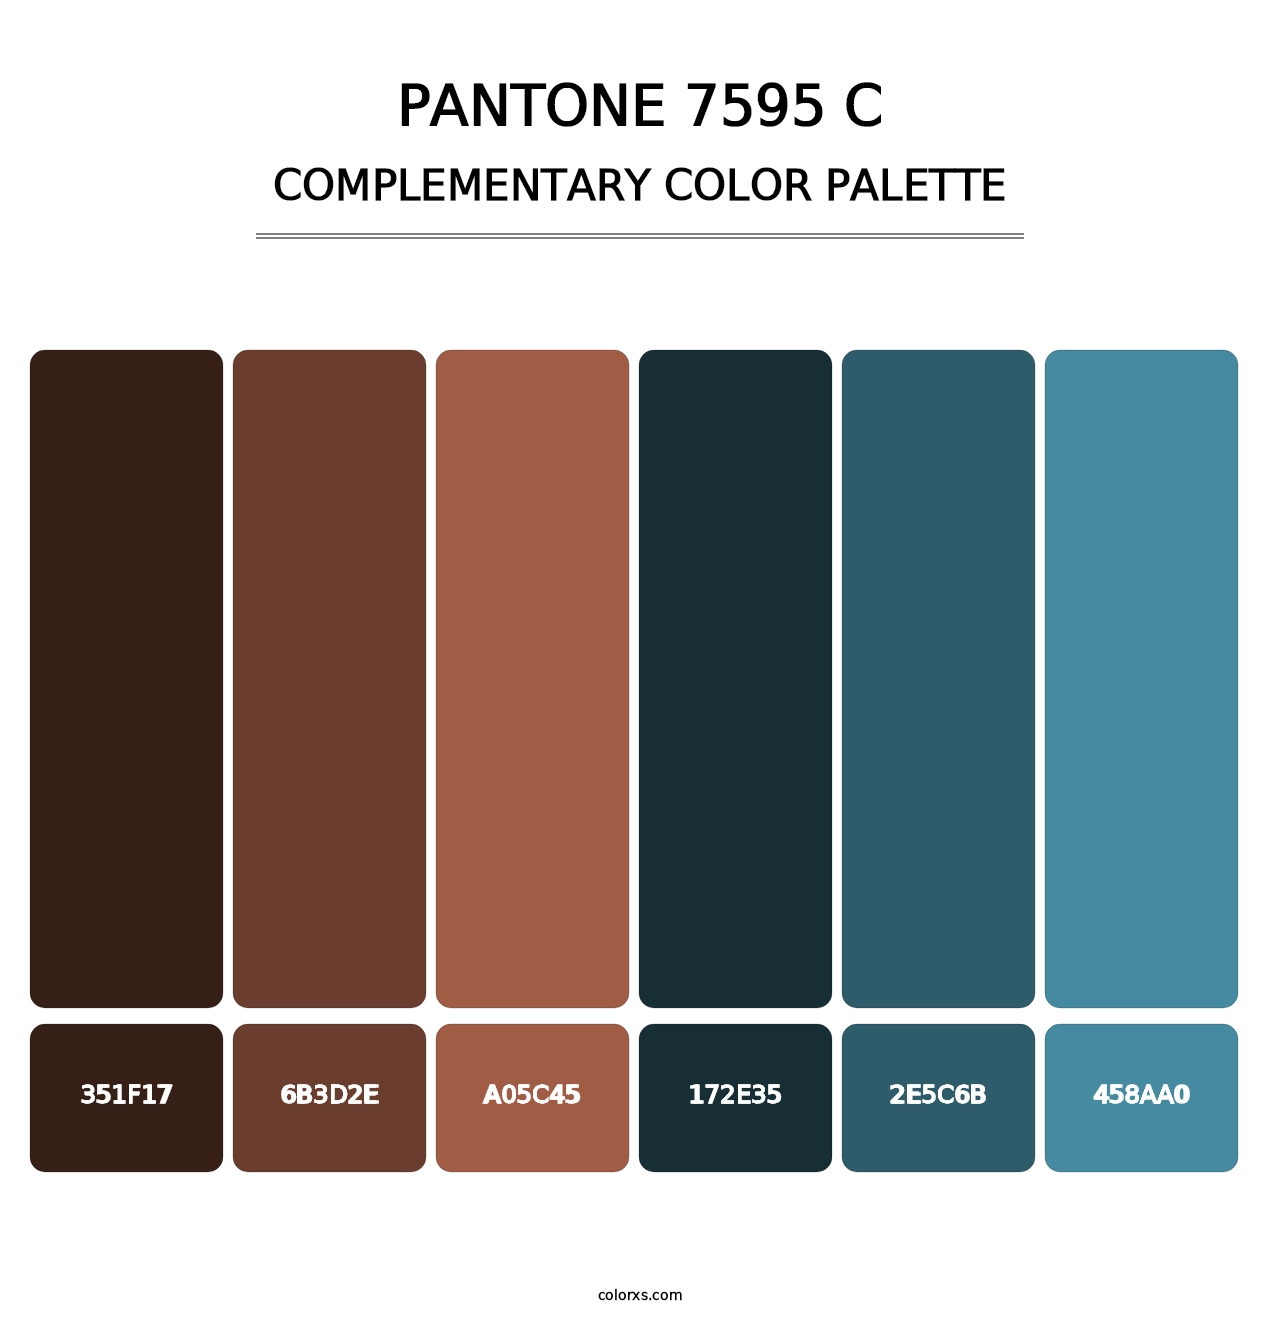 PANTONE 7595 C - Complementary Color Palette